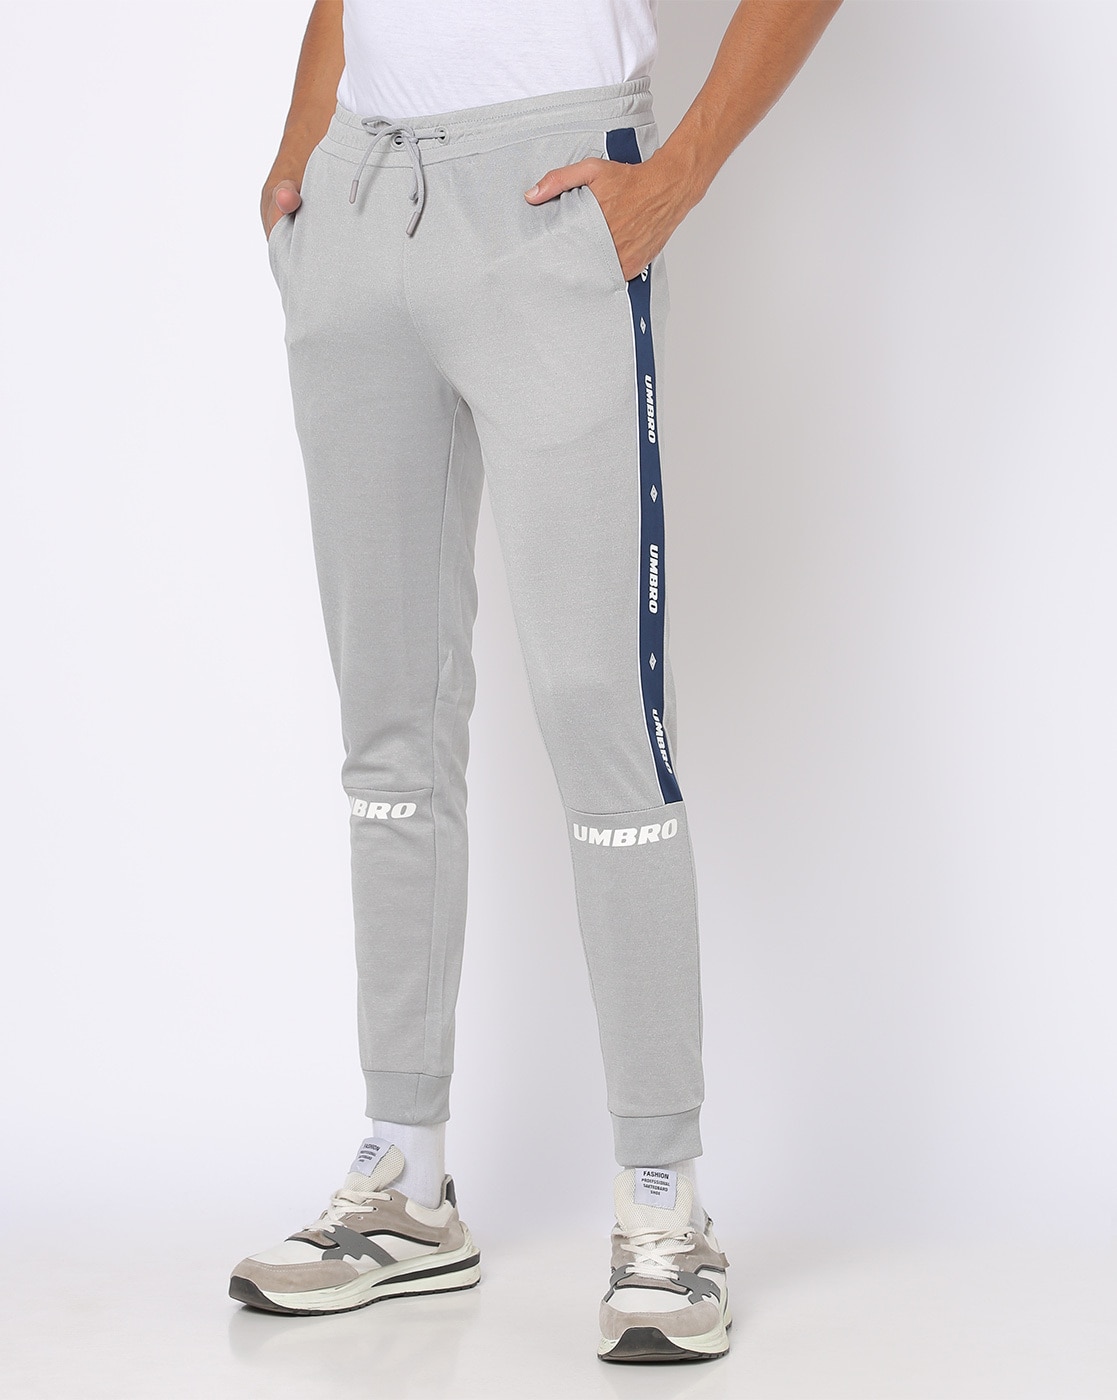 UMBRO Mens Joggers Jog Jogging Bottoms Track Pant Sweat Pants Slim Fit Size  NEW | eBay